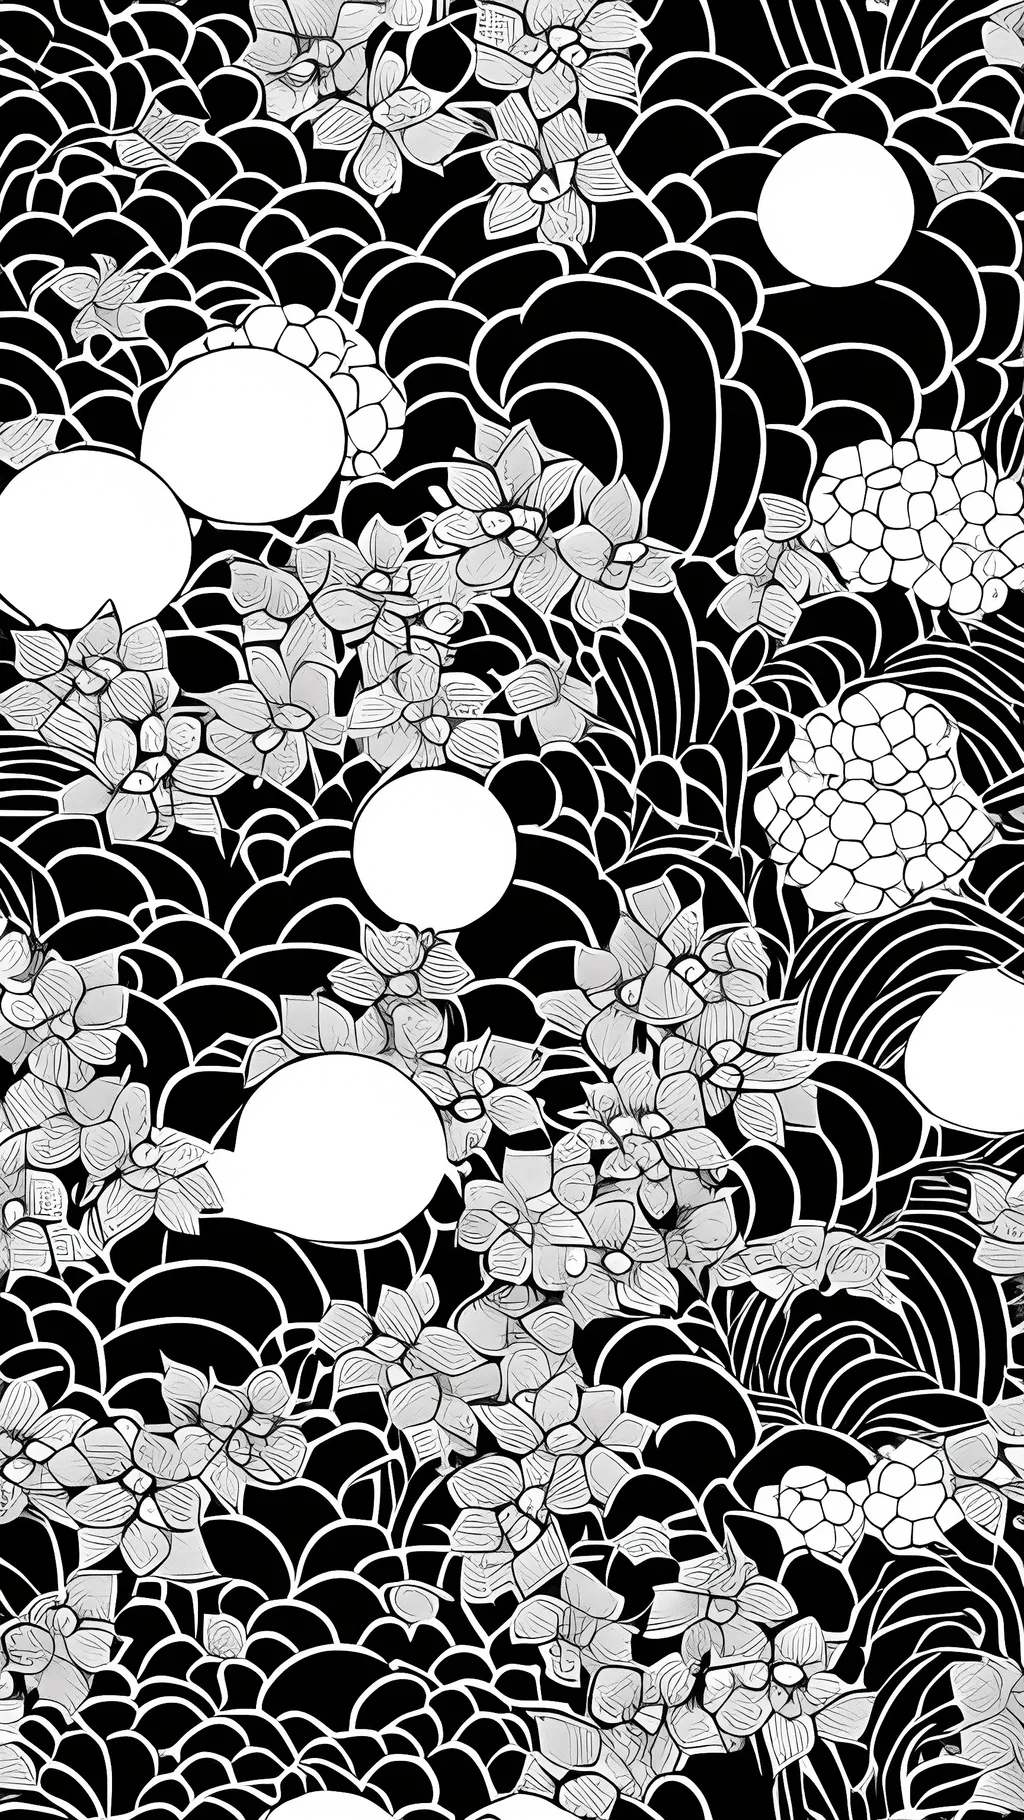 Prompt: Create a manga style black and white image of Asanoha pattern